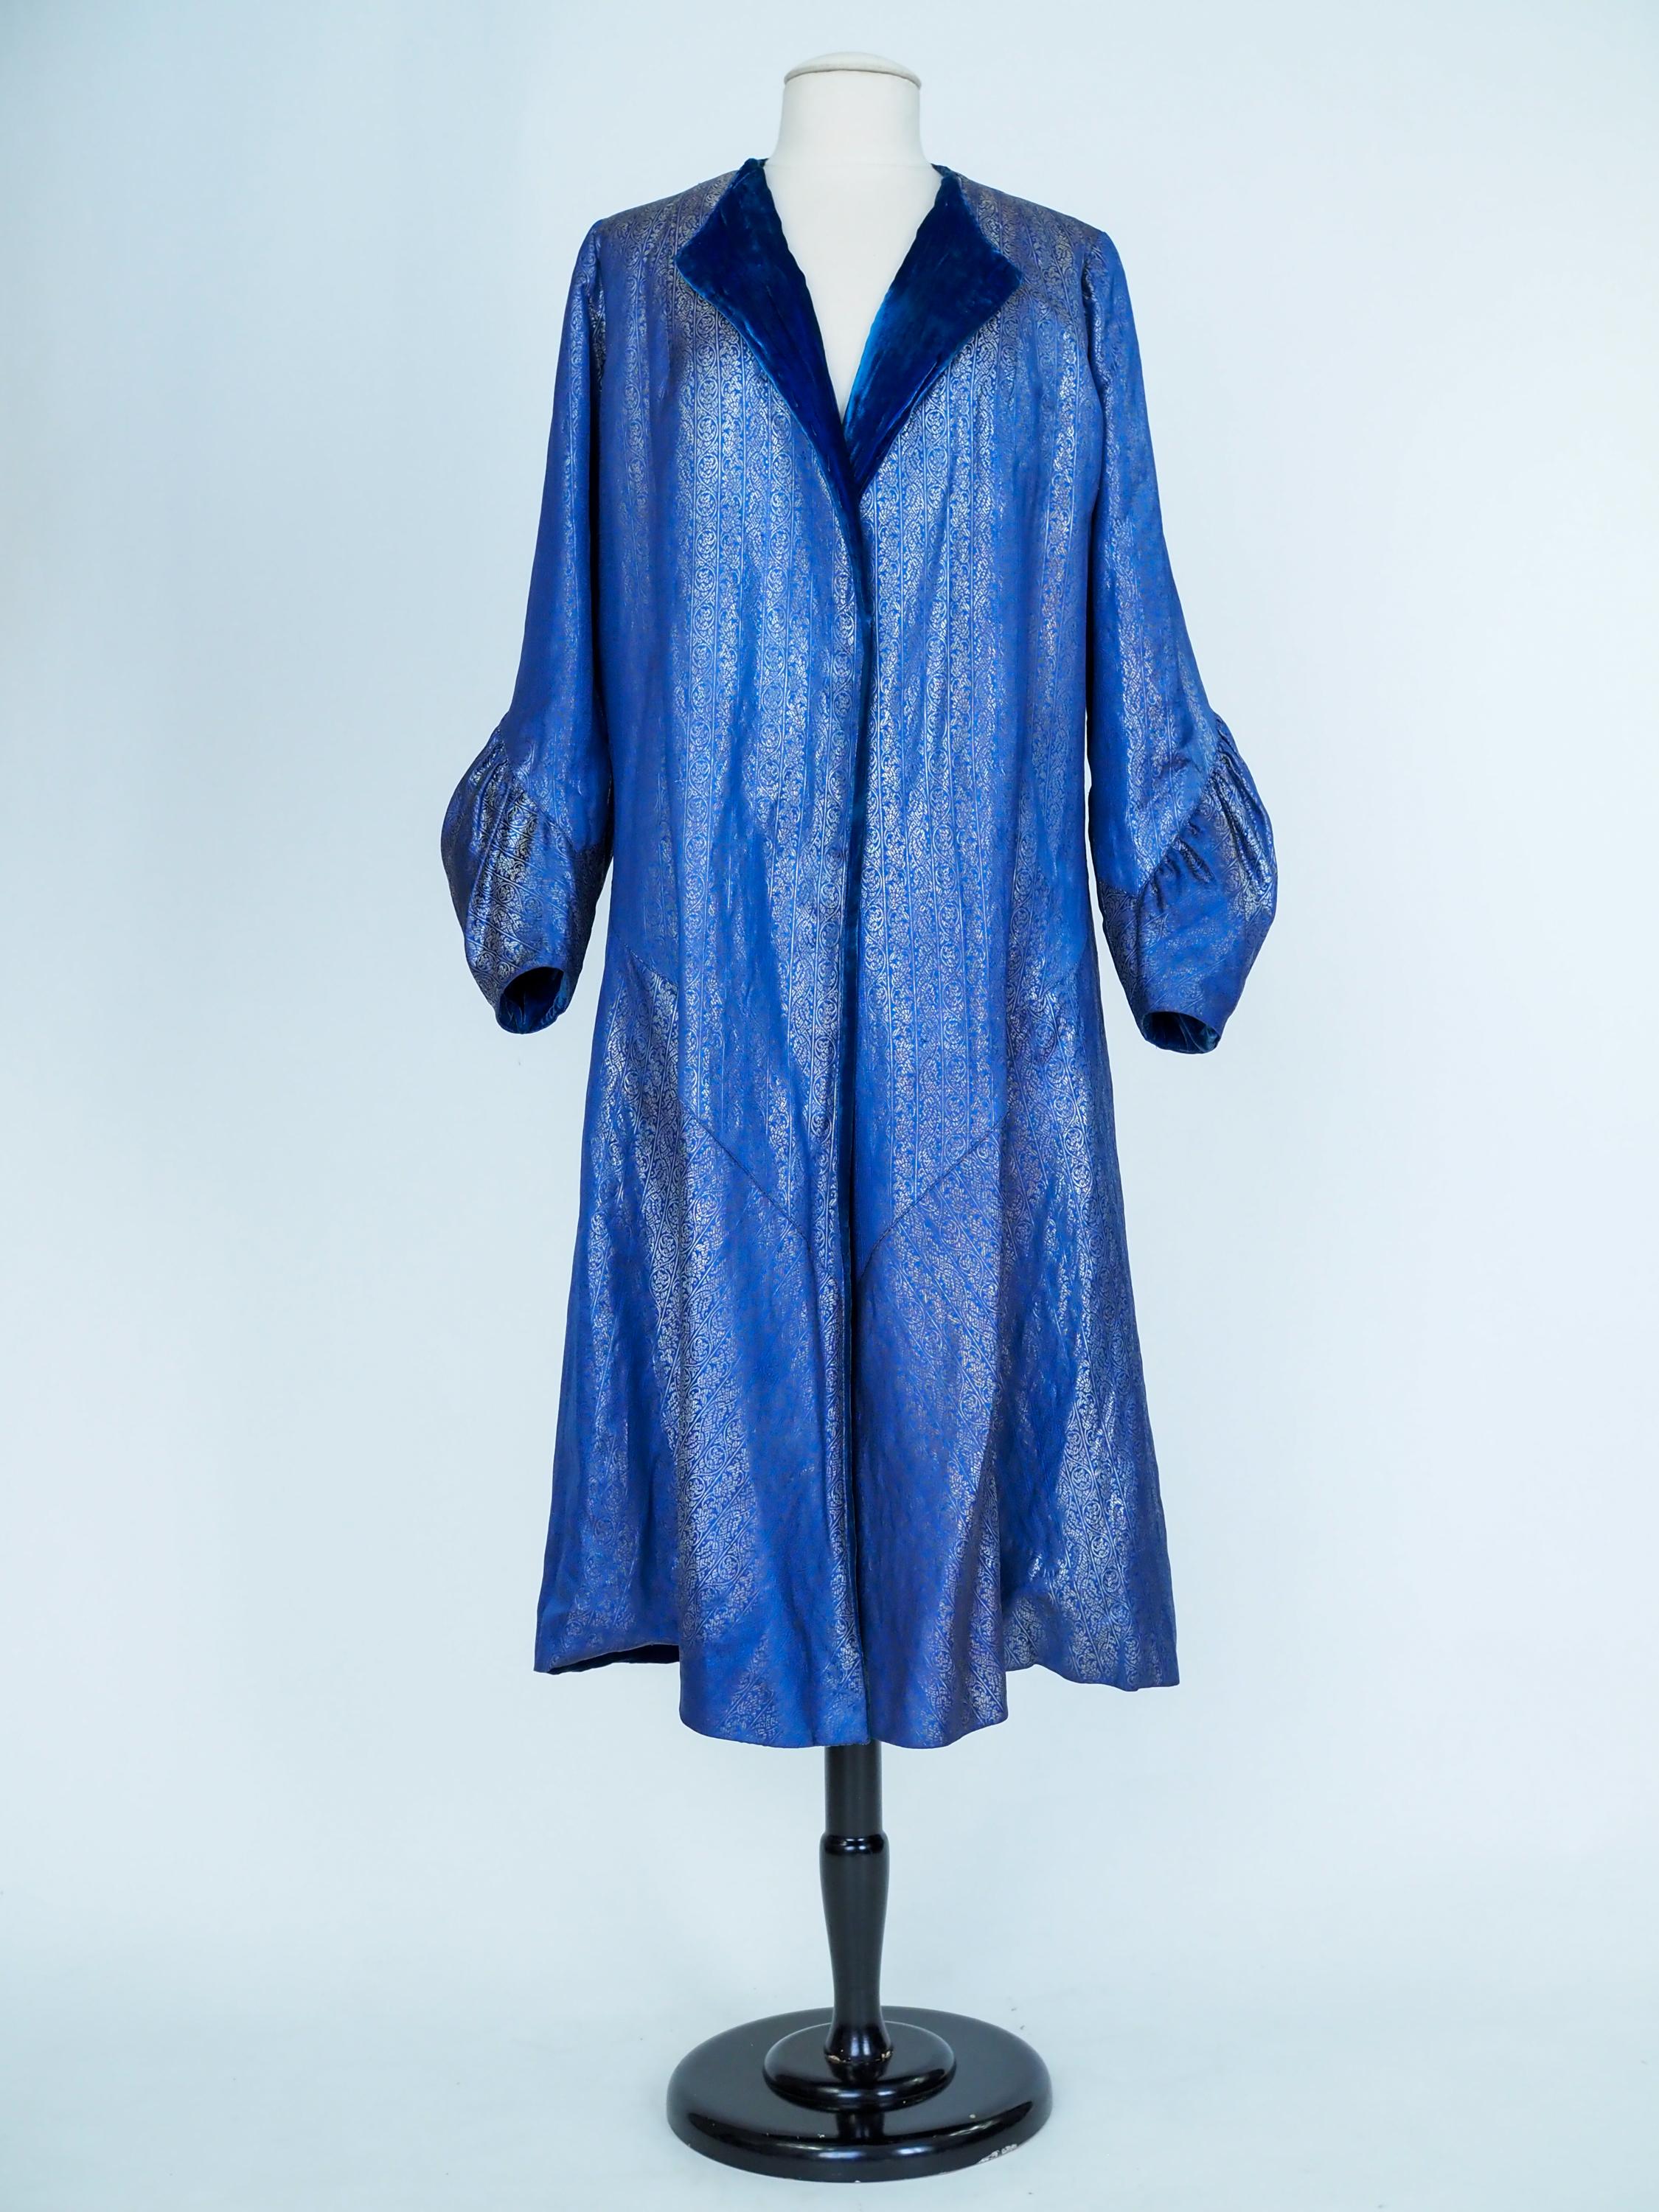 Women's Evening Couture coat in silver lamé by Germaine Lecomte N°03871 Paris Circa 1930 For Sale